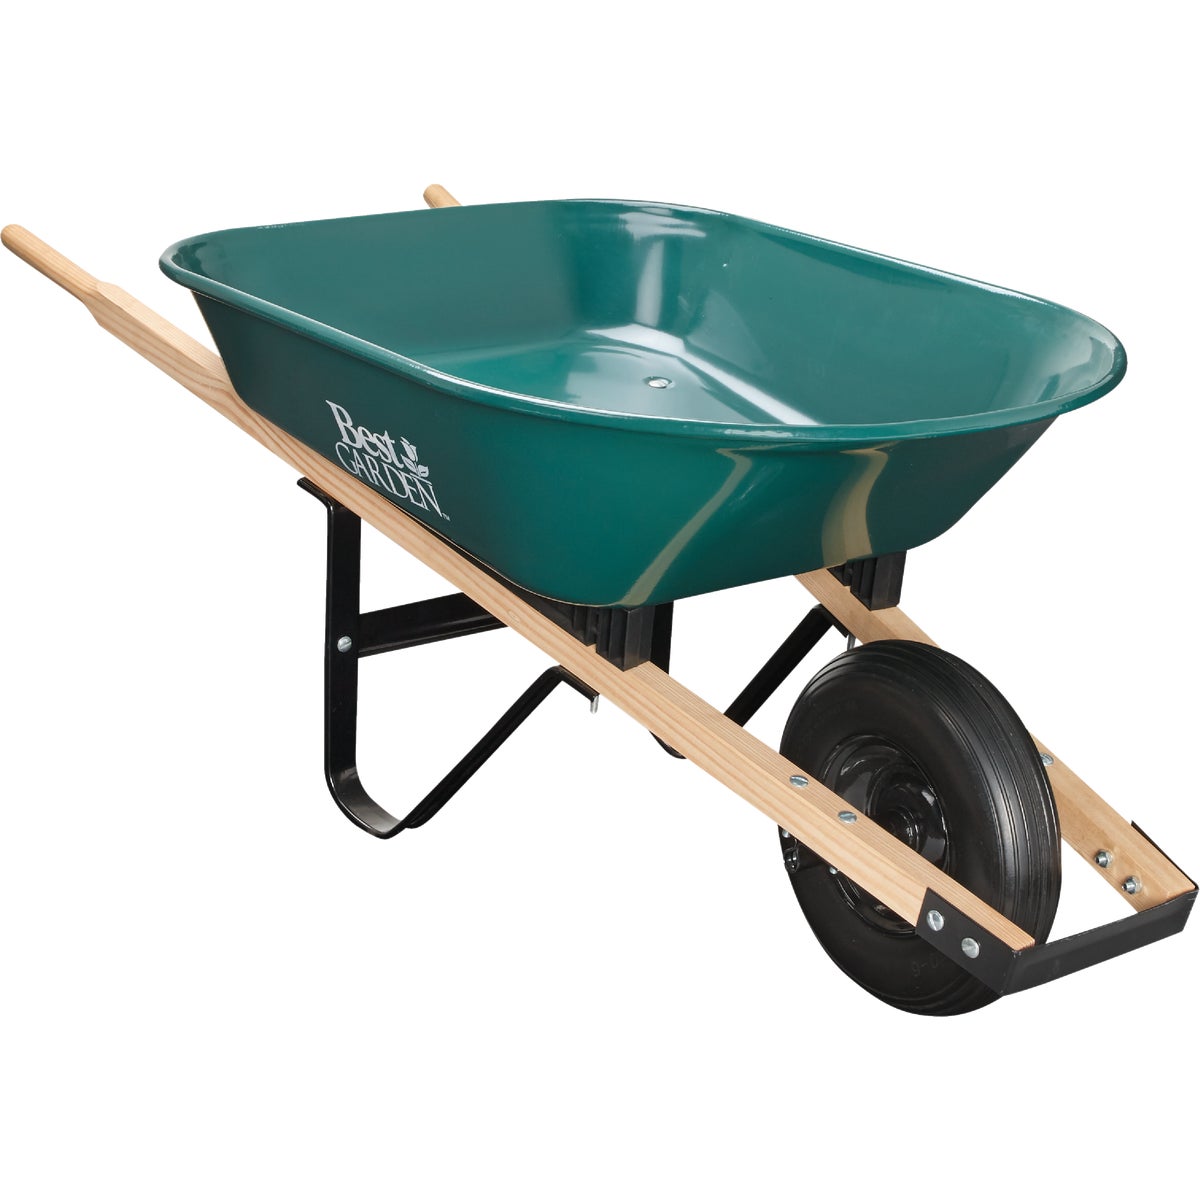 Item 705355, Best Garden 4 Cu. Ft. Wheelbarrow has a steel tray with hardwood handles.